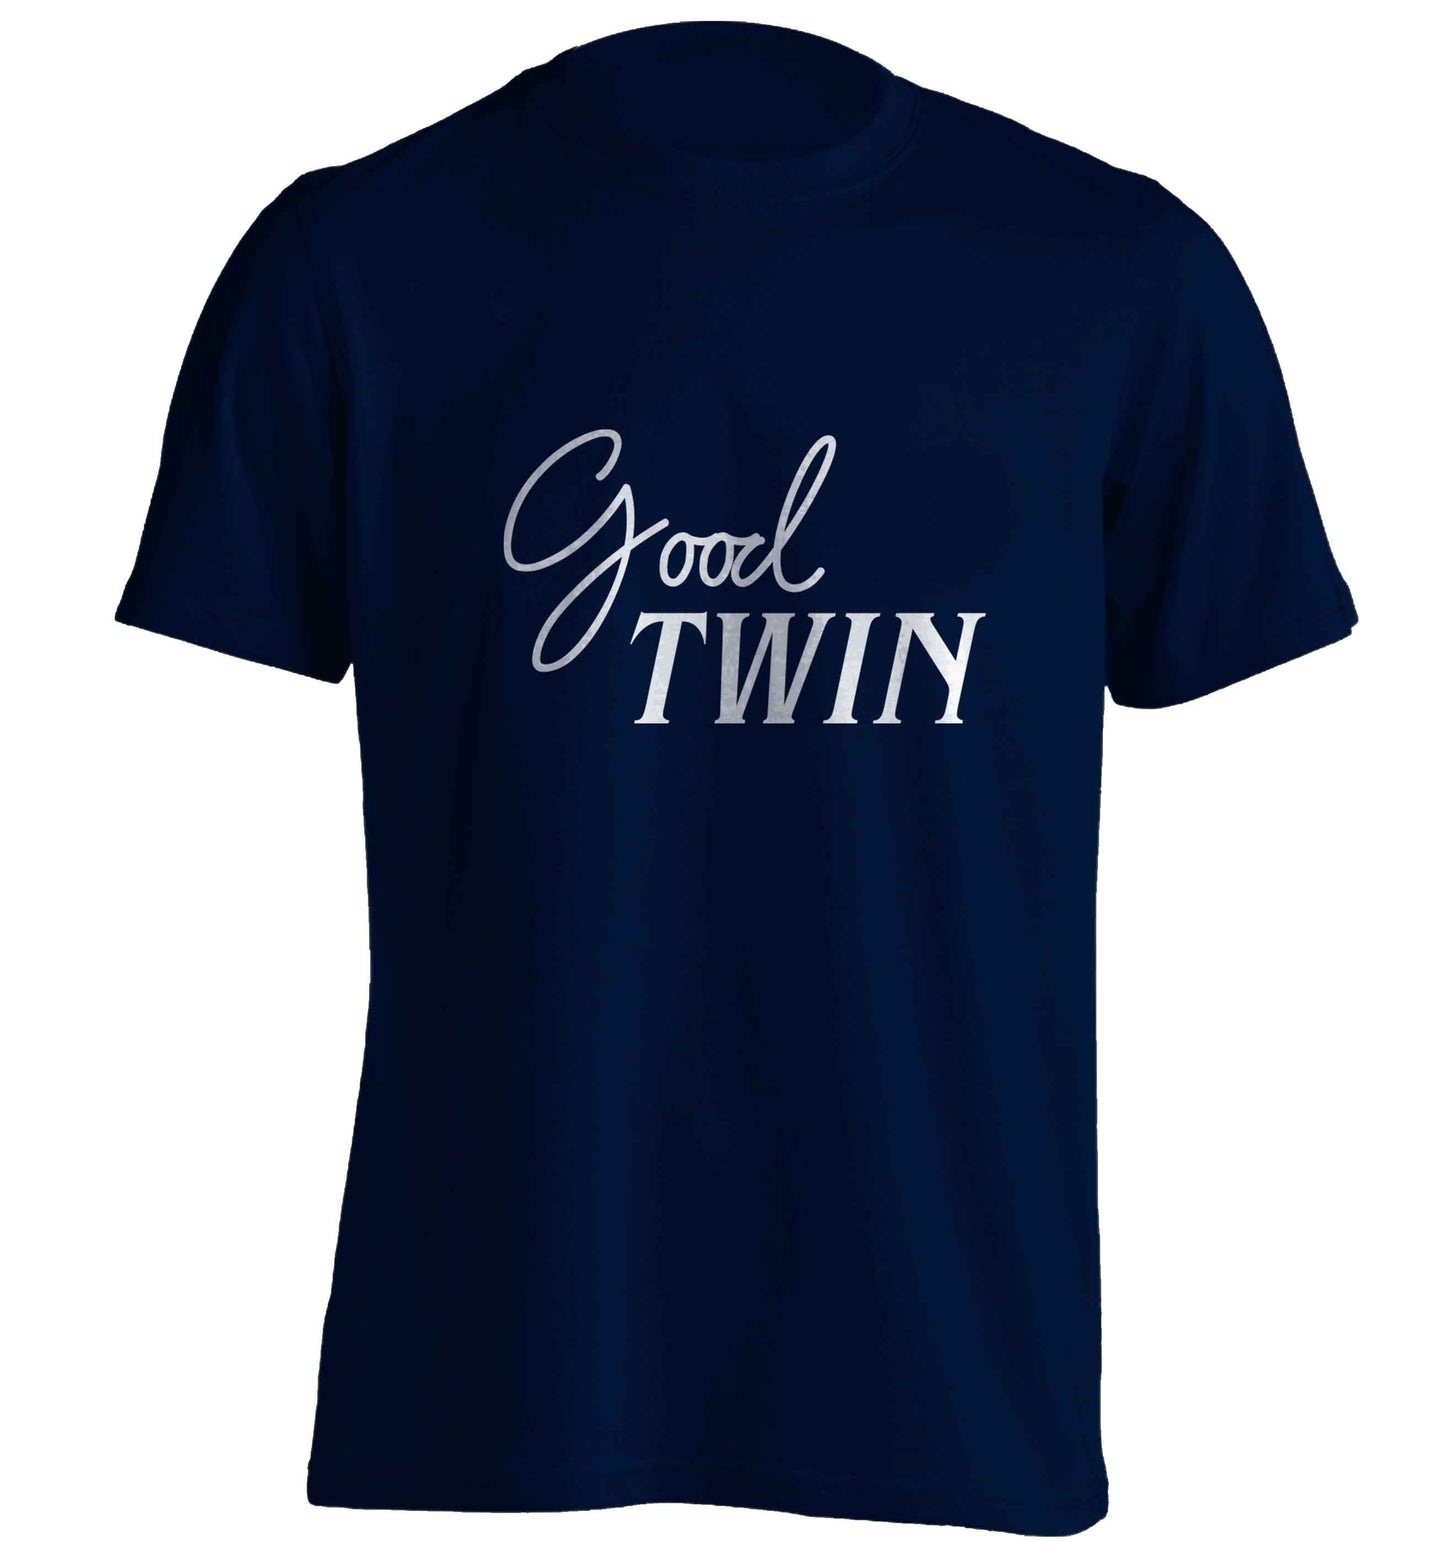 Good twin adults unisex navy Tshirt 2XL